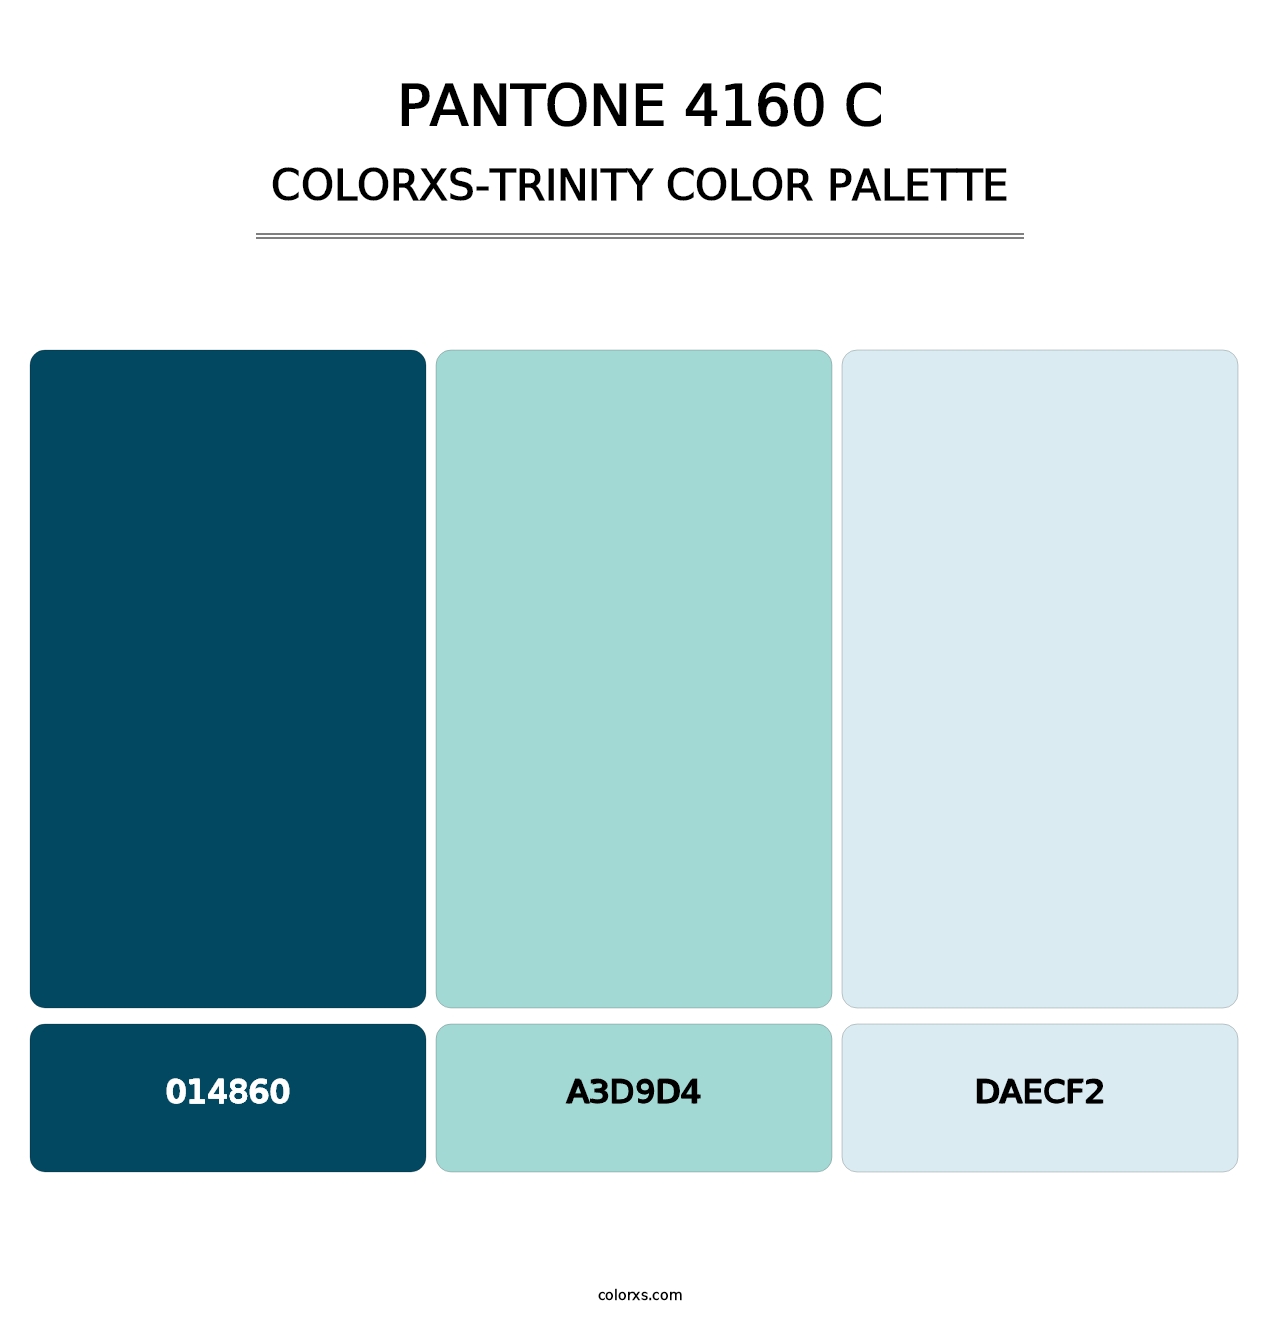 PANTONE 4160 C - Colorxs Trinity Palette